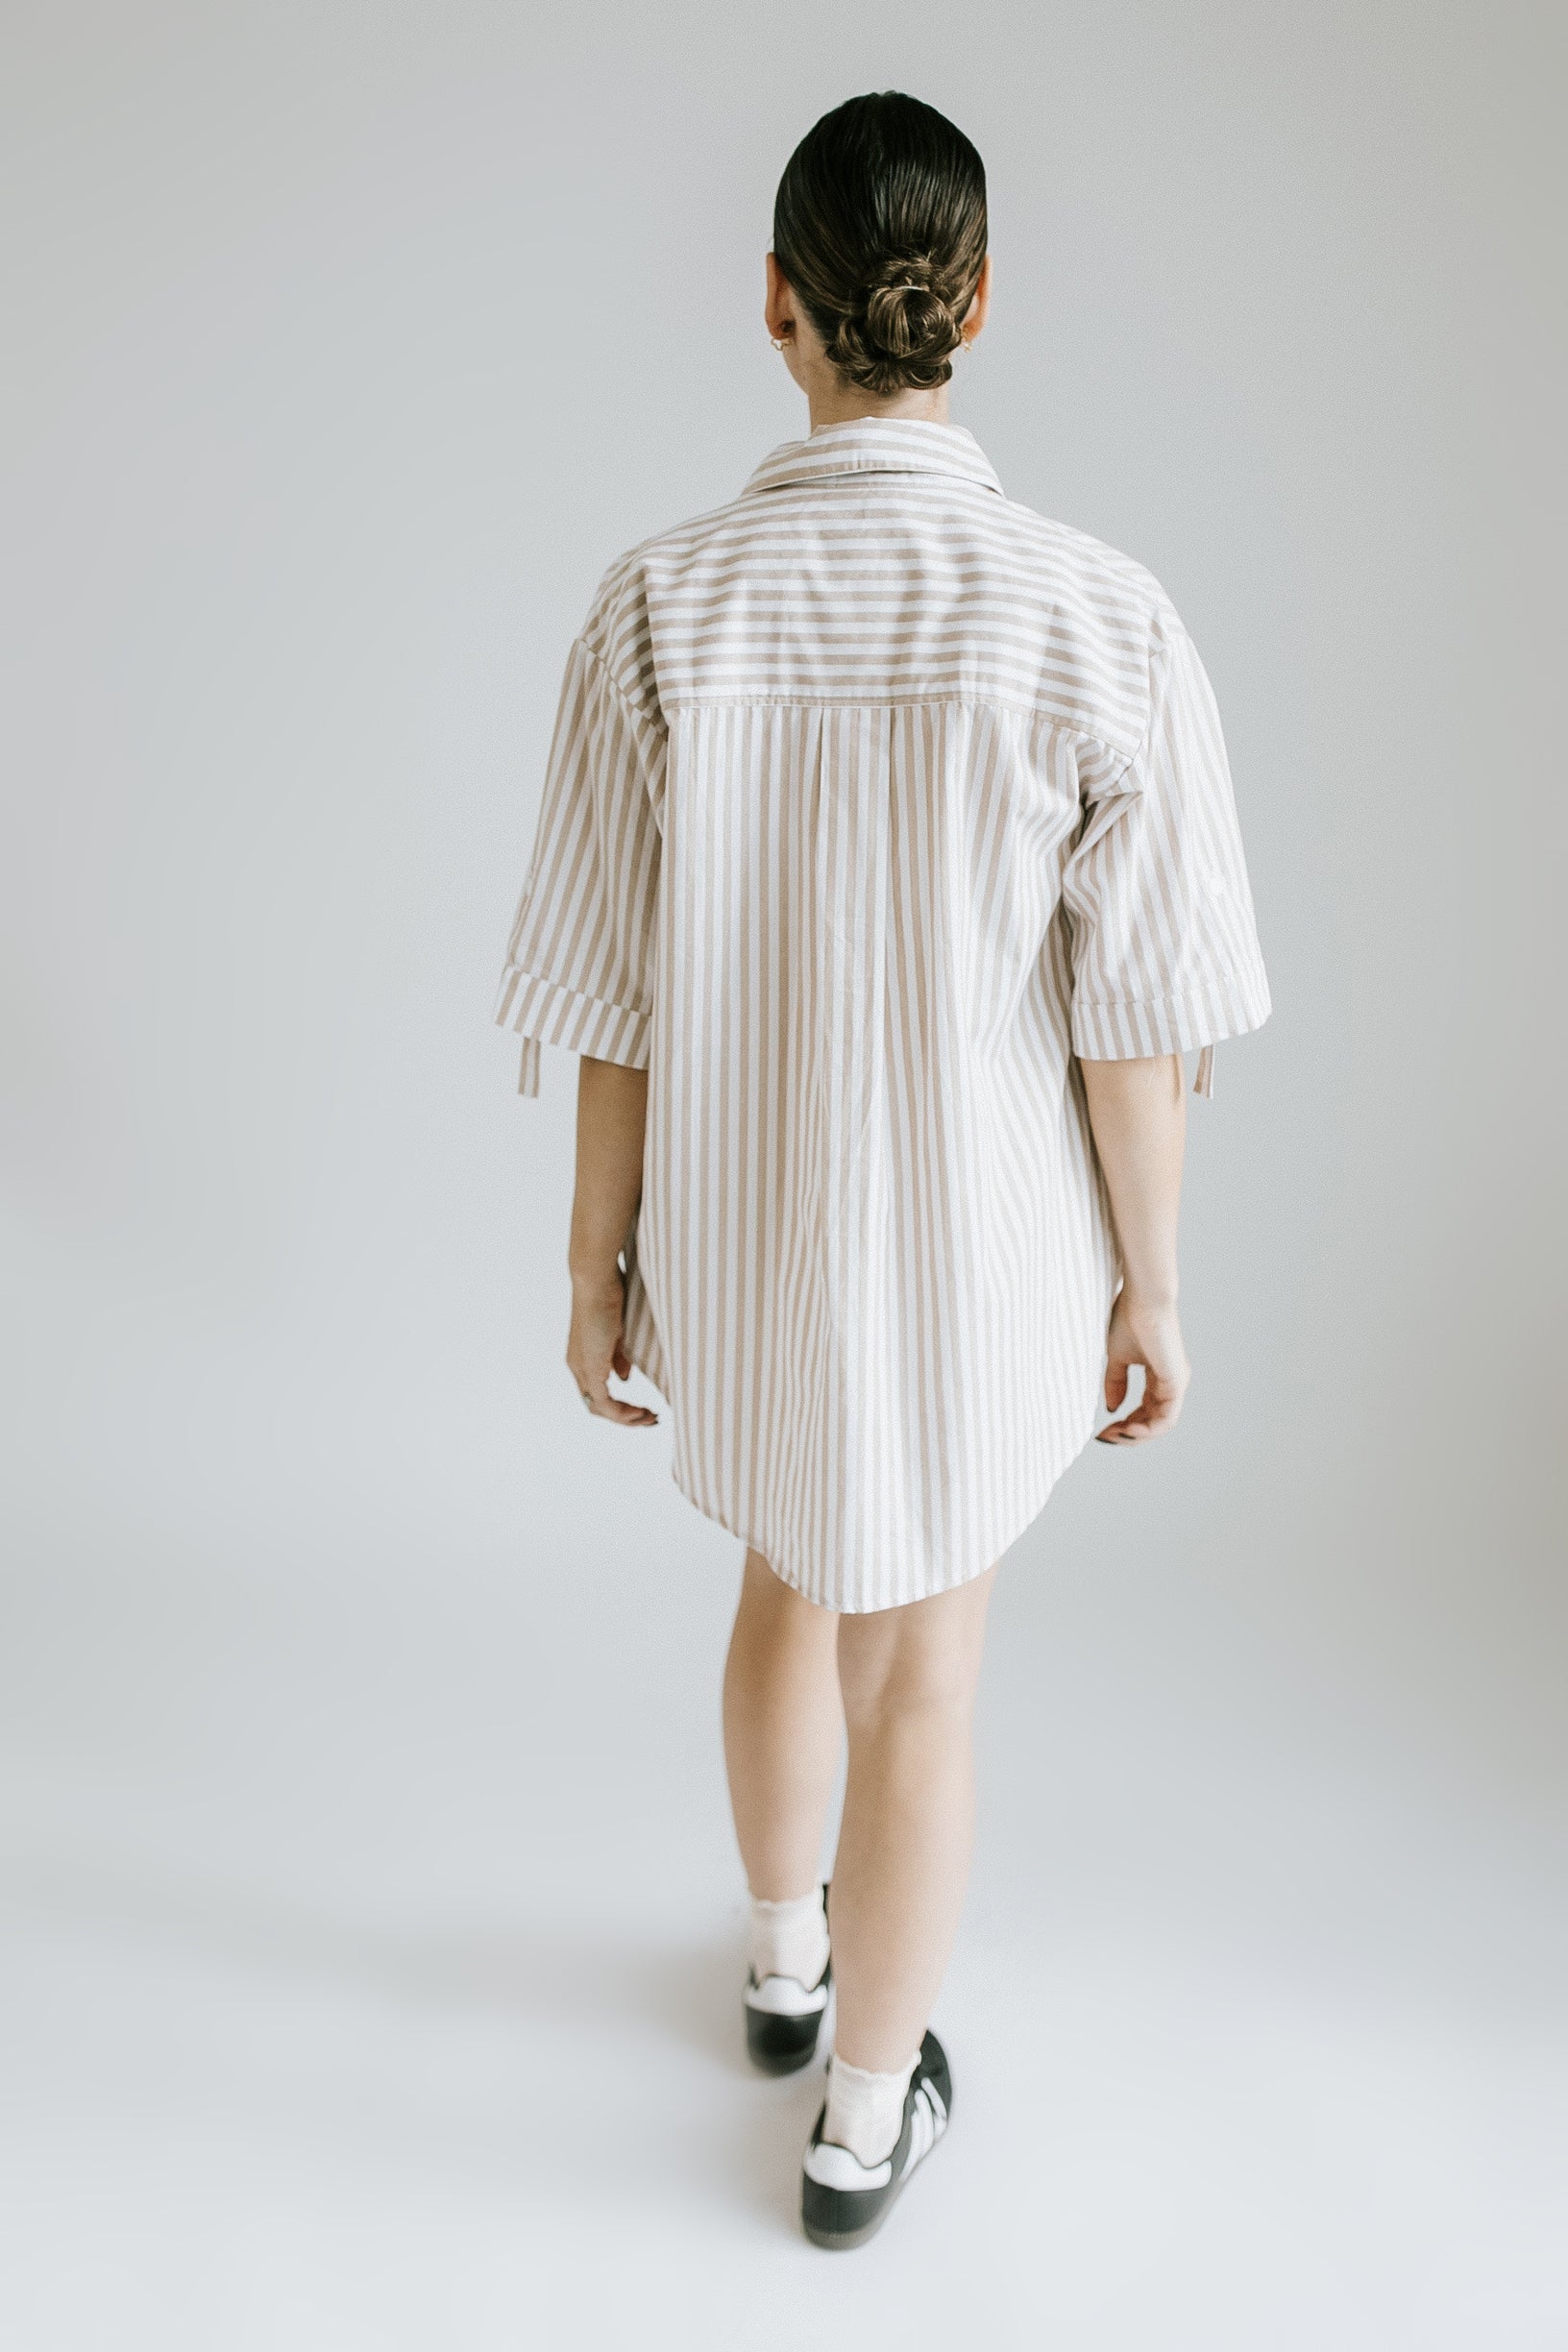 Astrid Button Down Shirt - White + Taupe